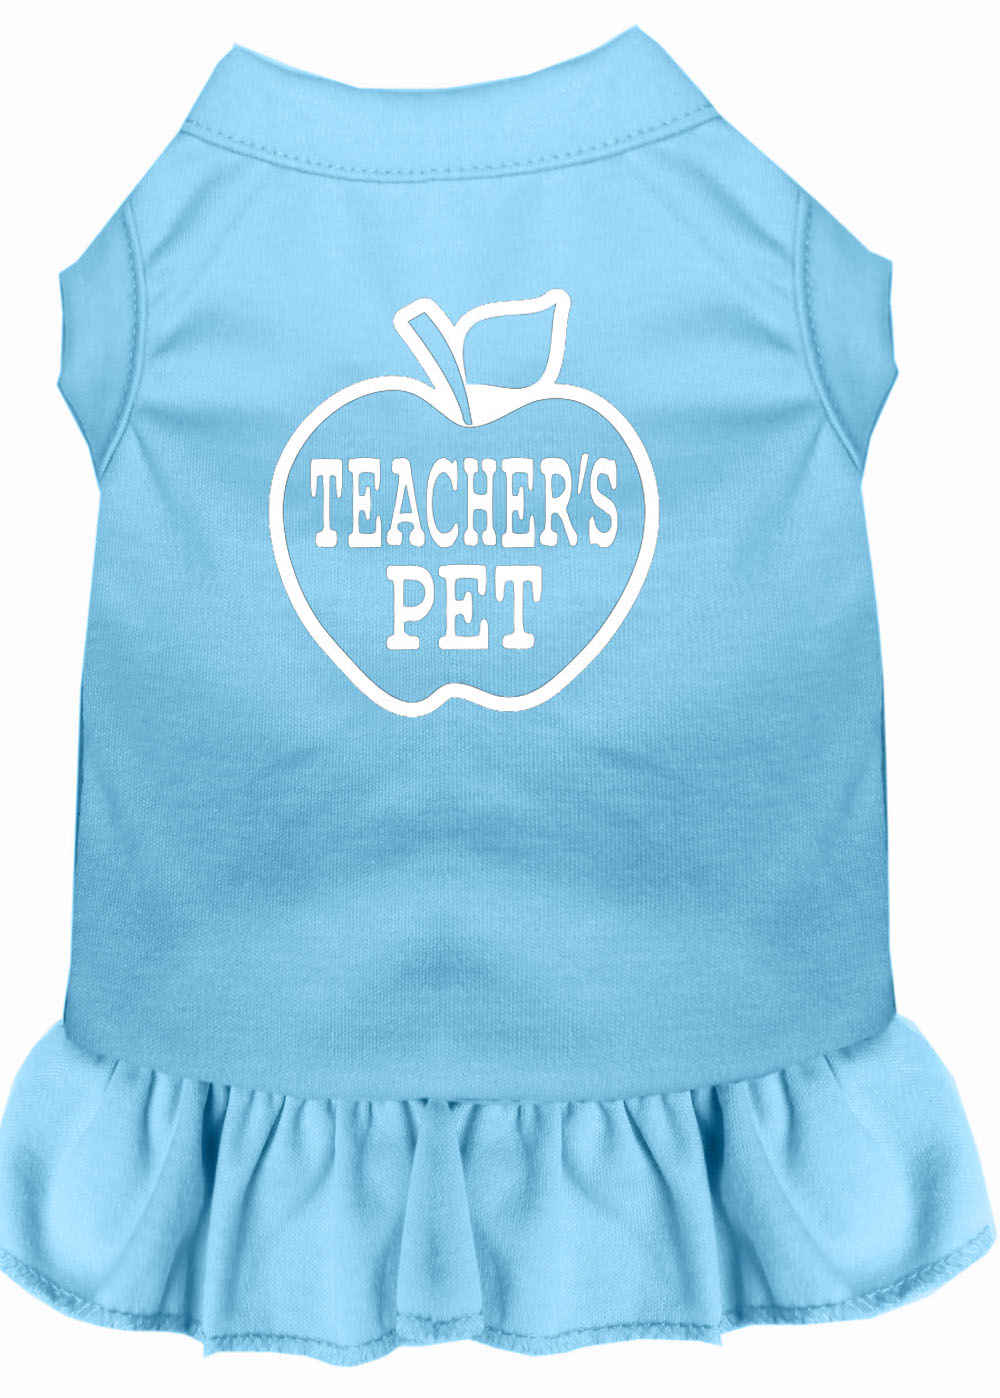 Teachers Pet Screen Print Dress Baby Blue Lg GreatEagleInc